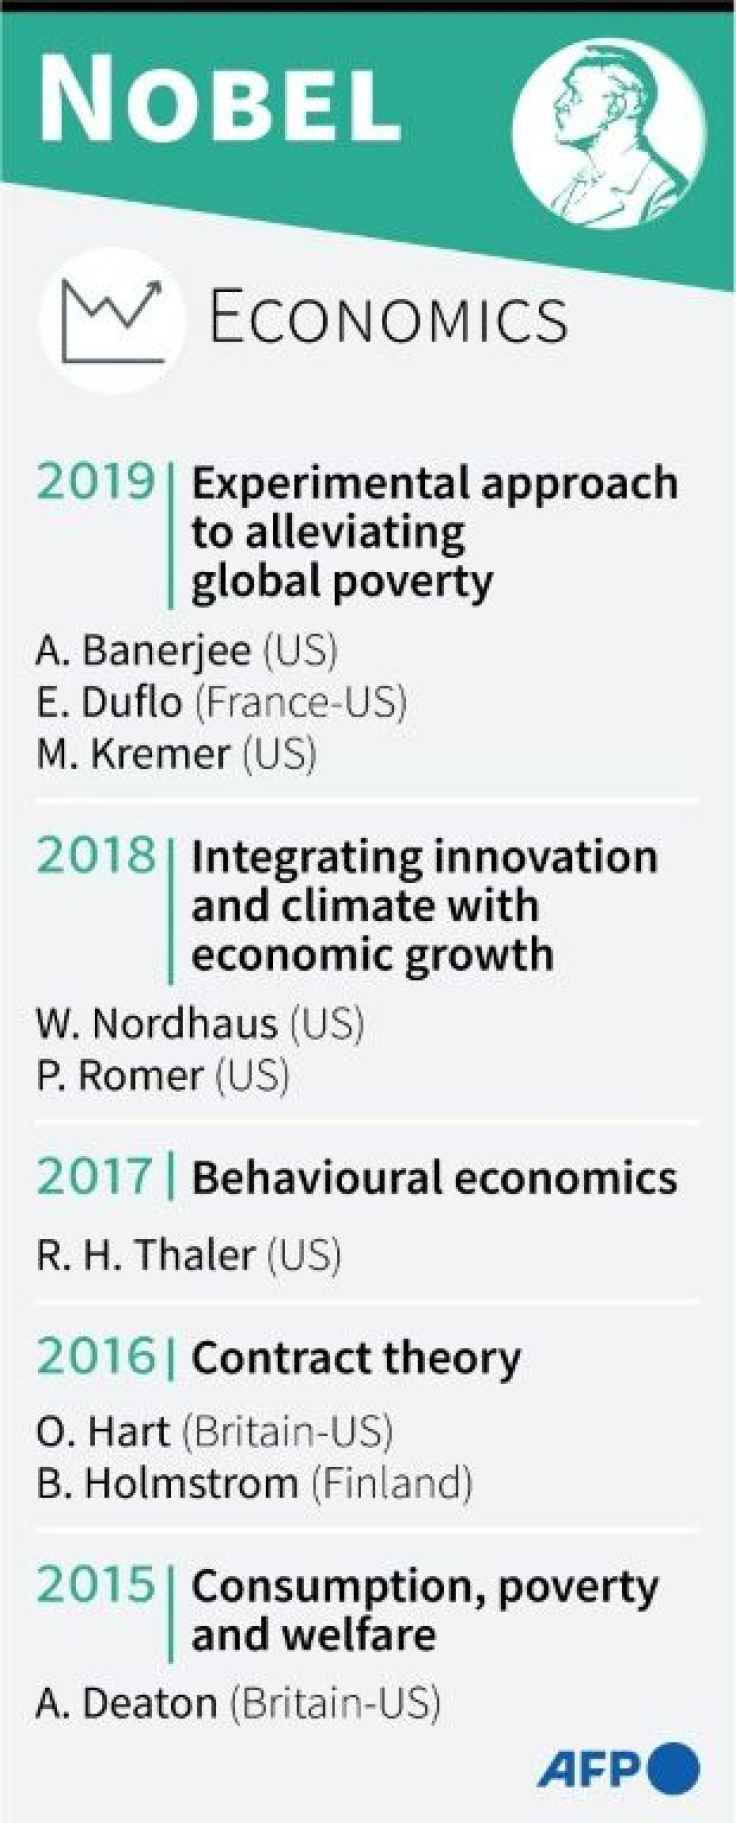 Past winners of the economics Nobel